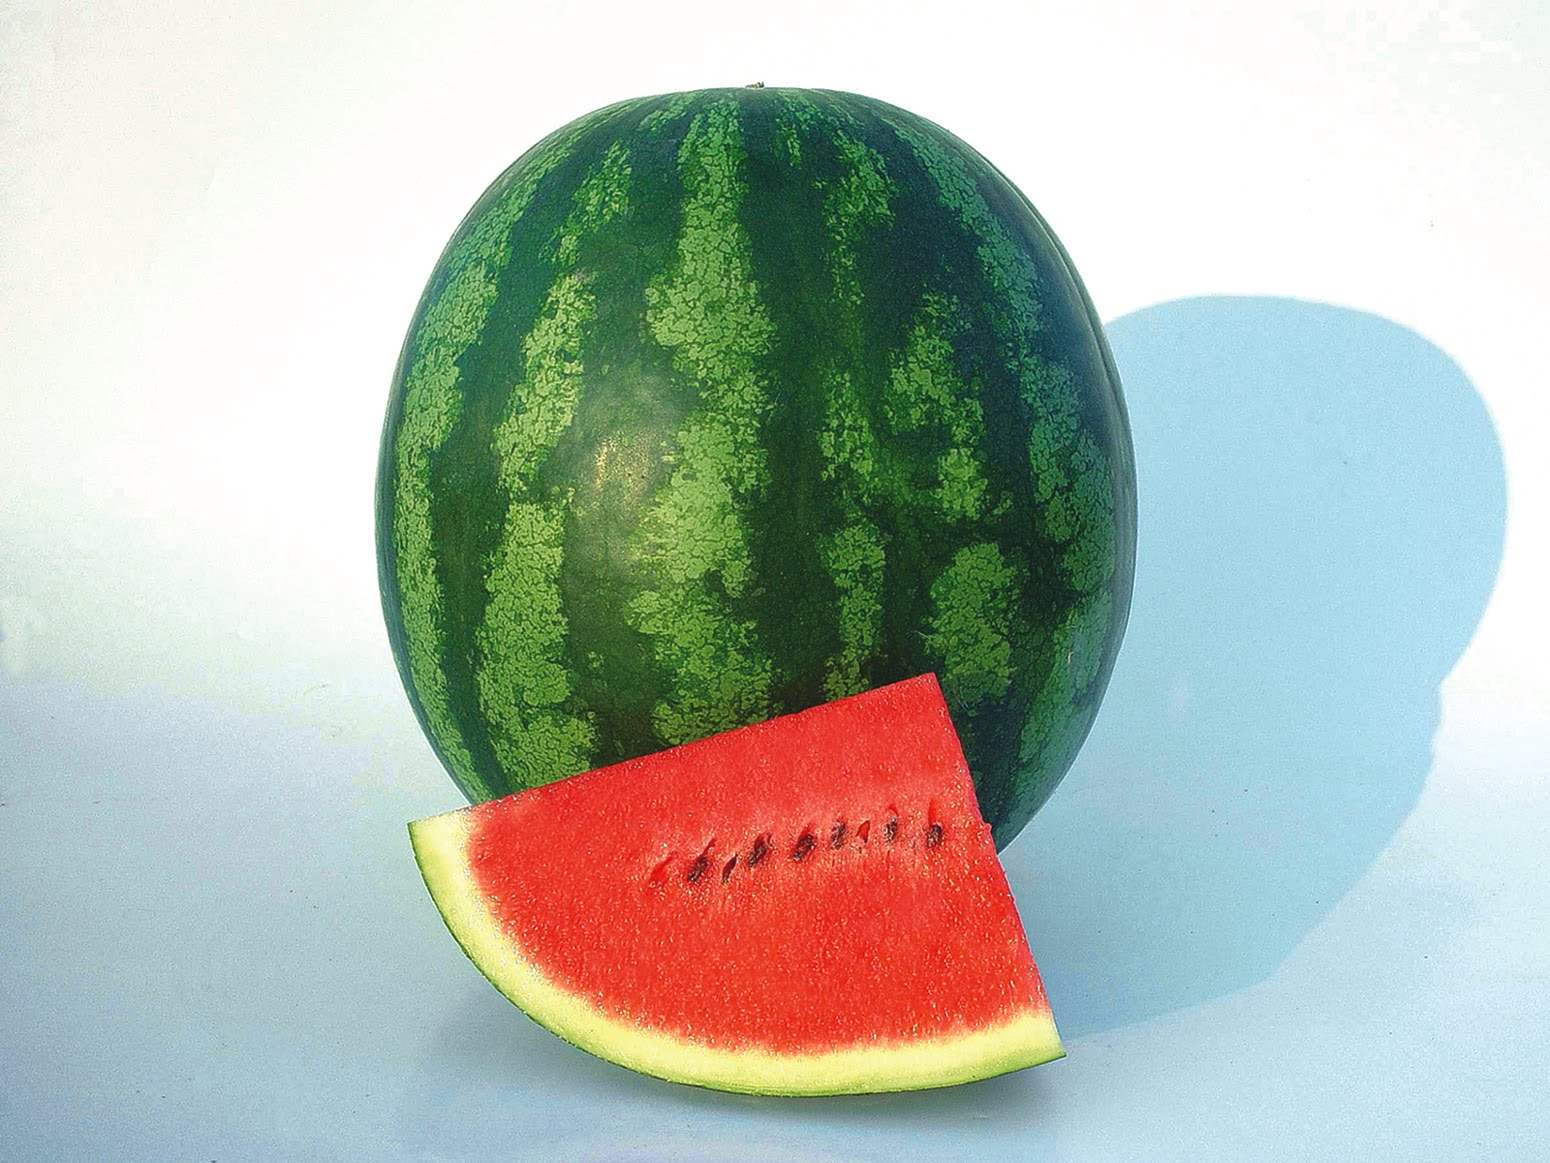 Hd Wallpaper Of Fruits Of Watermelon. Full Desktop Background